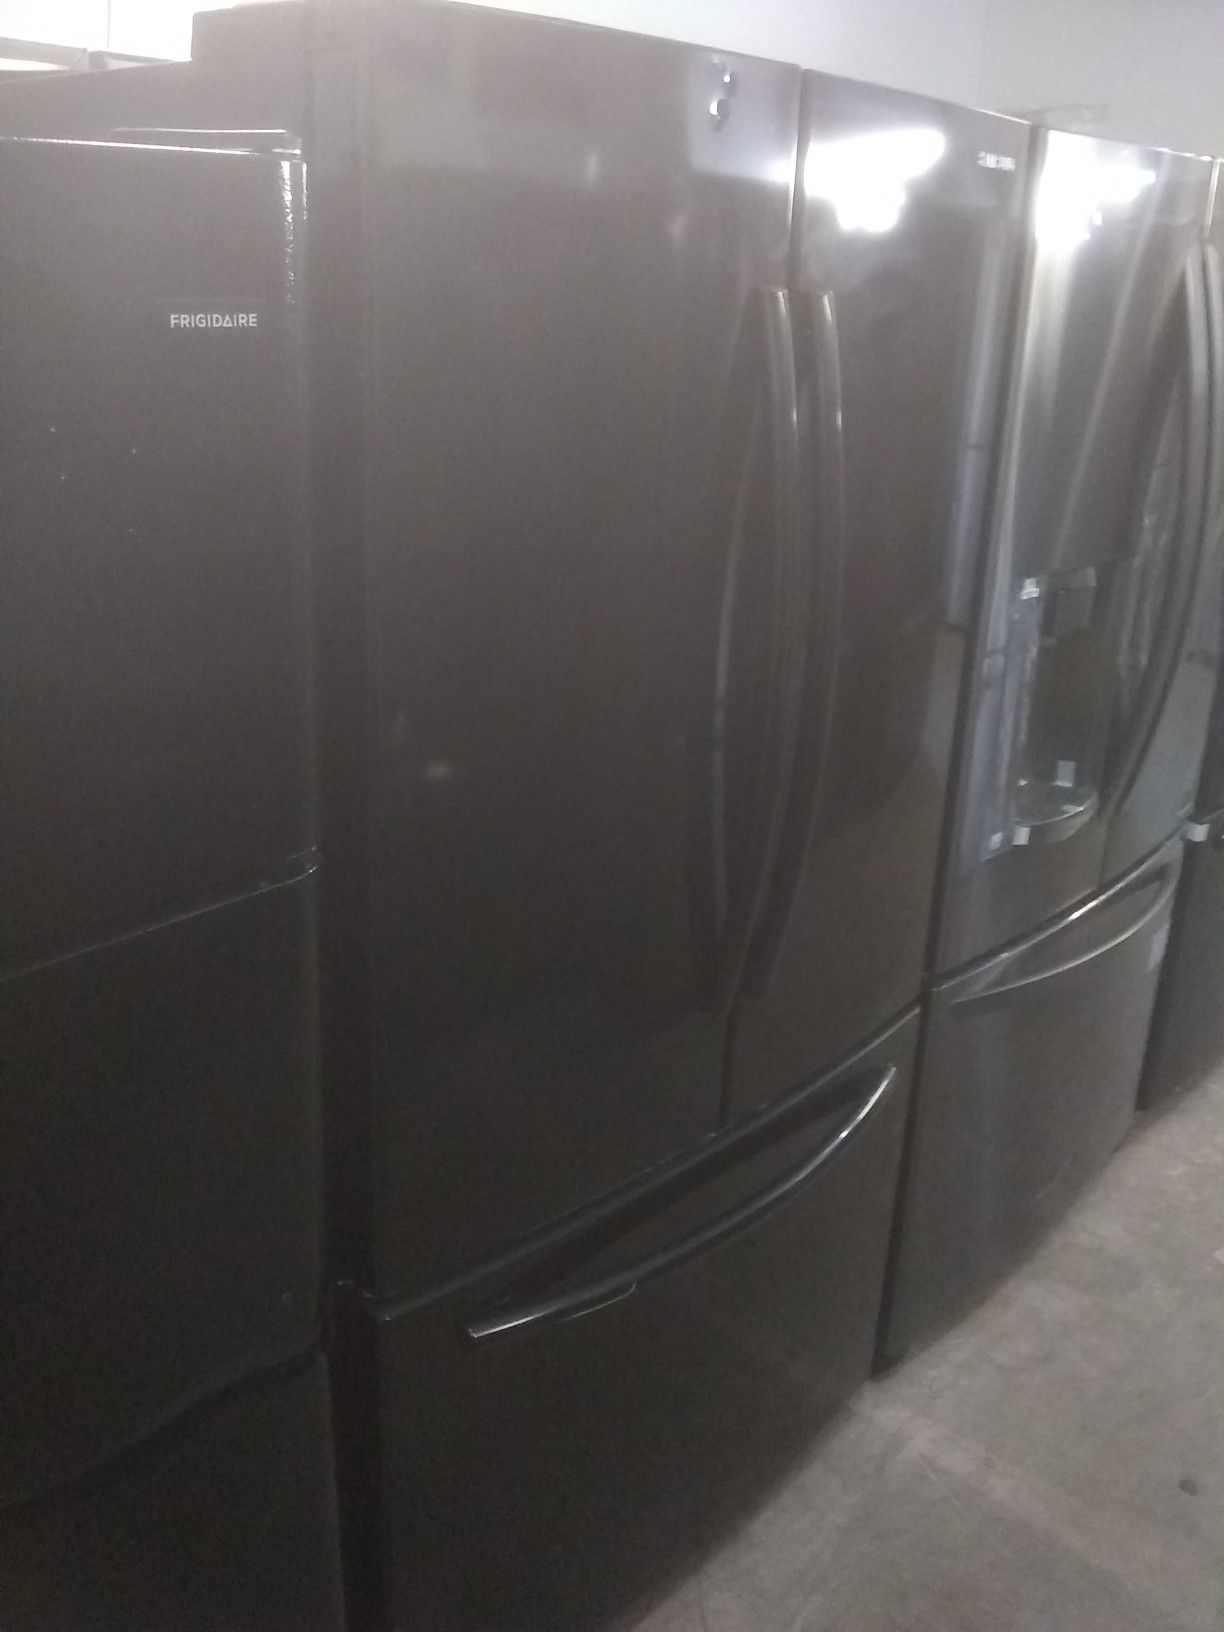 Samsung black french door refrigerator home and kitchen appliances